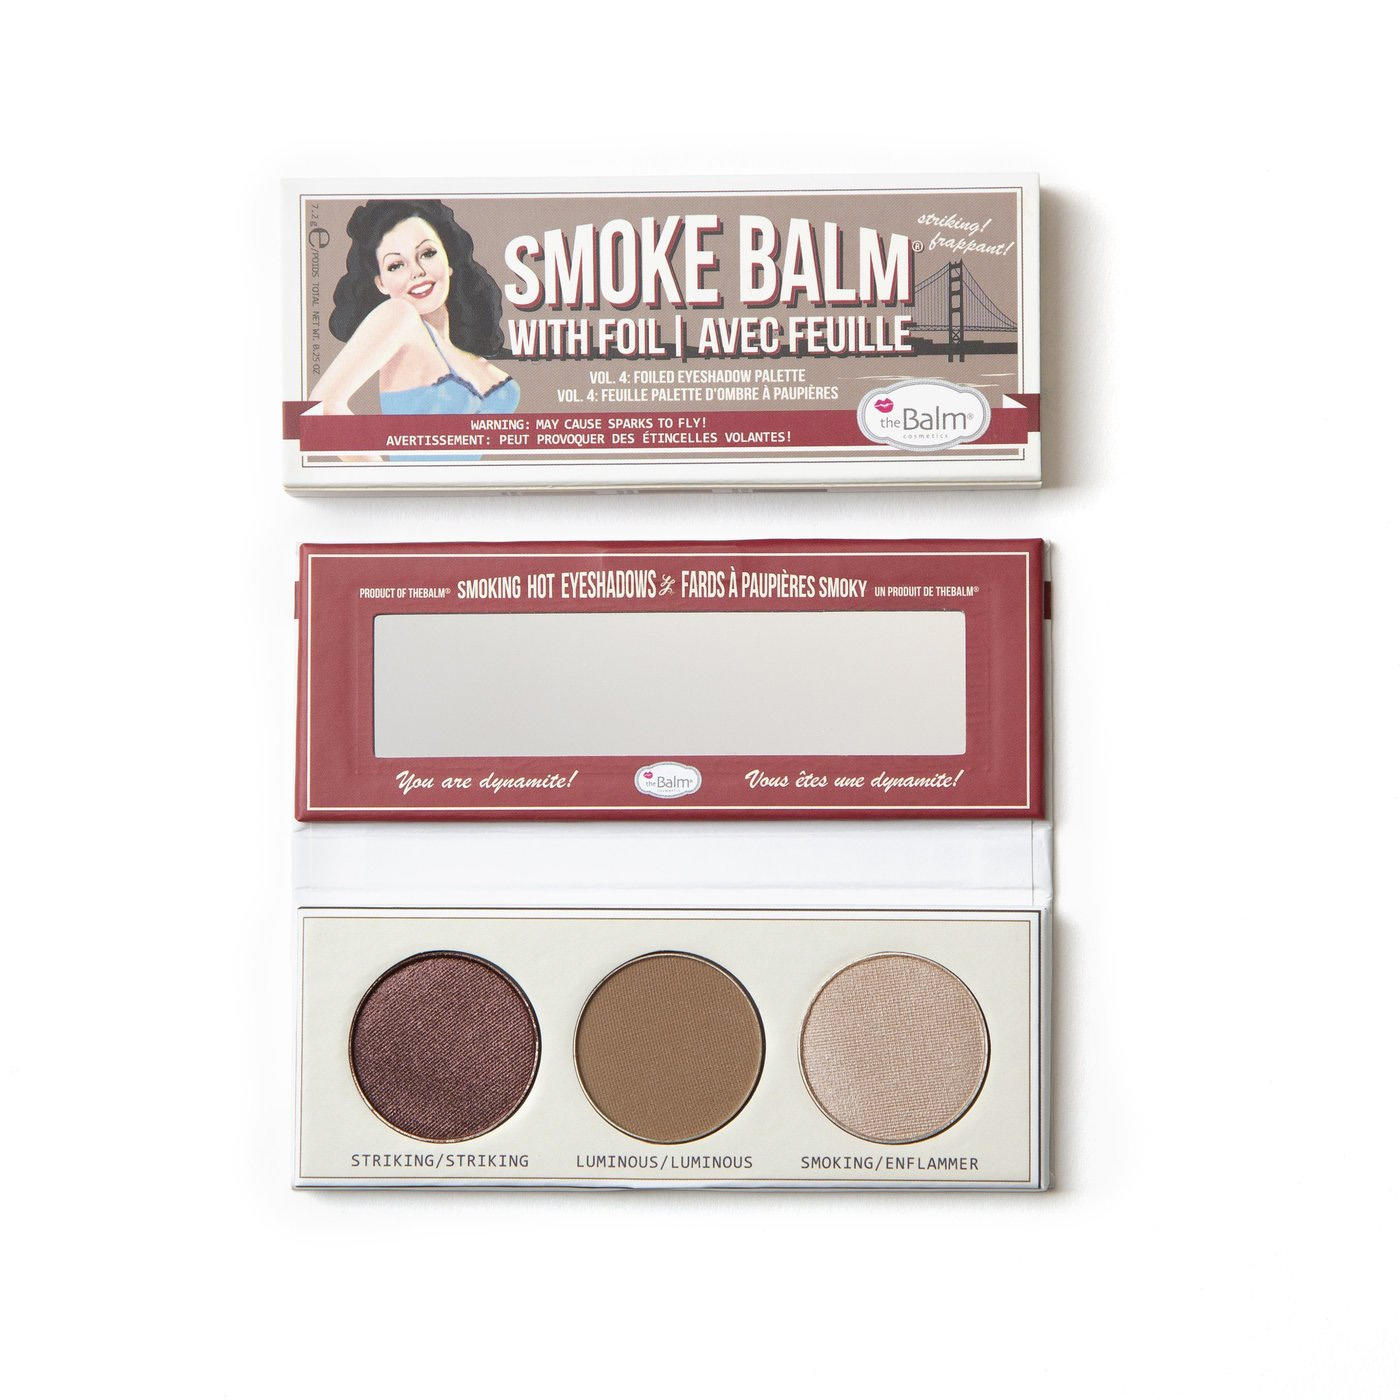 The Balm Smoke Balm Foiled Eyeshadow Palette Vol. 4